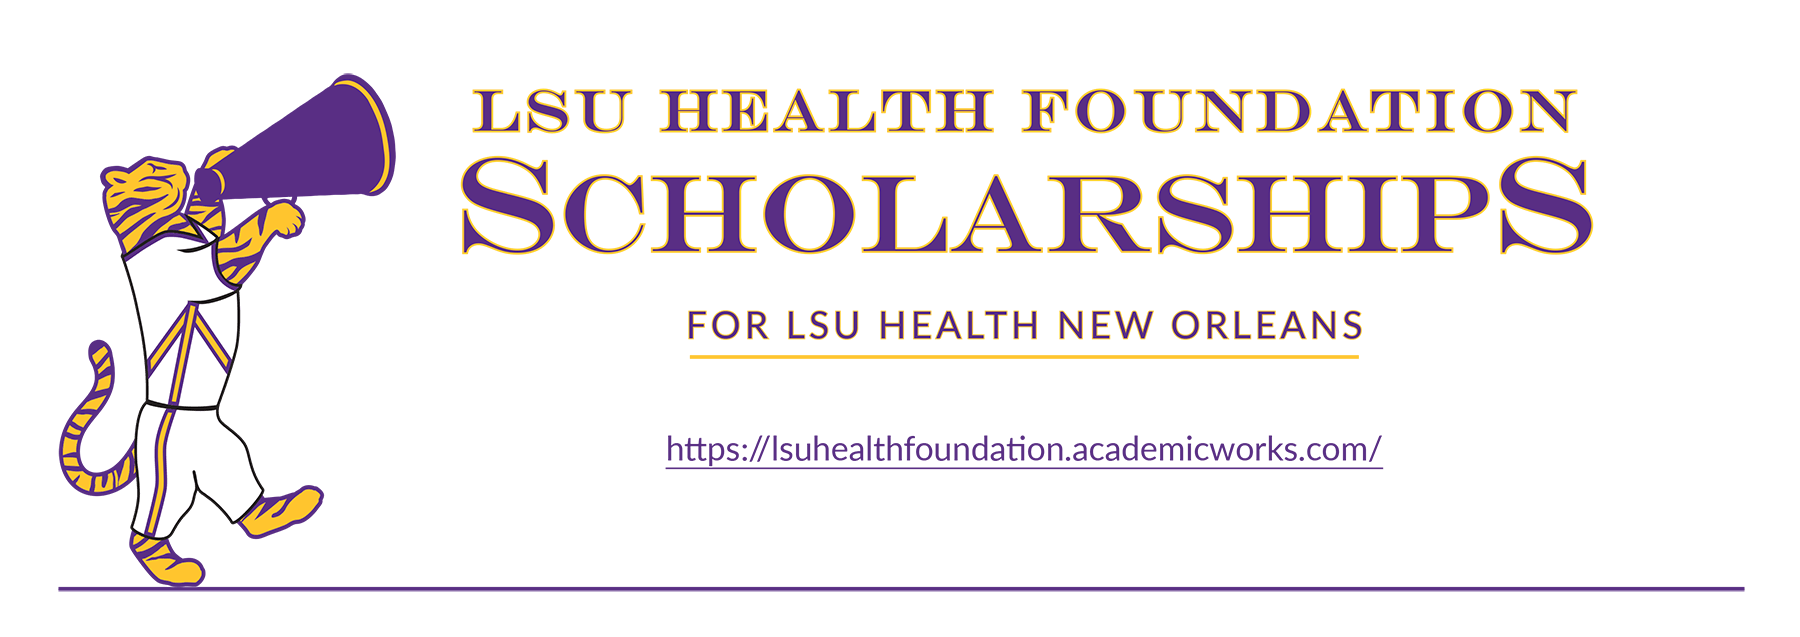 LSU Health Foundation's scholarship application website